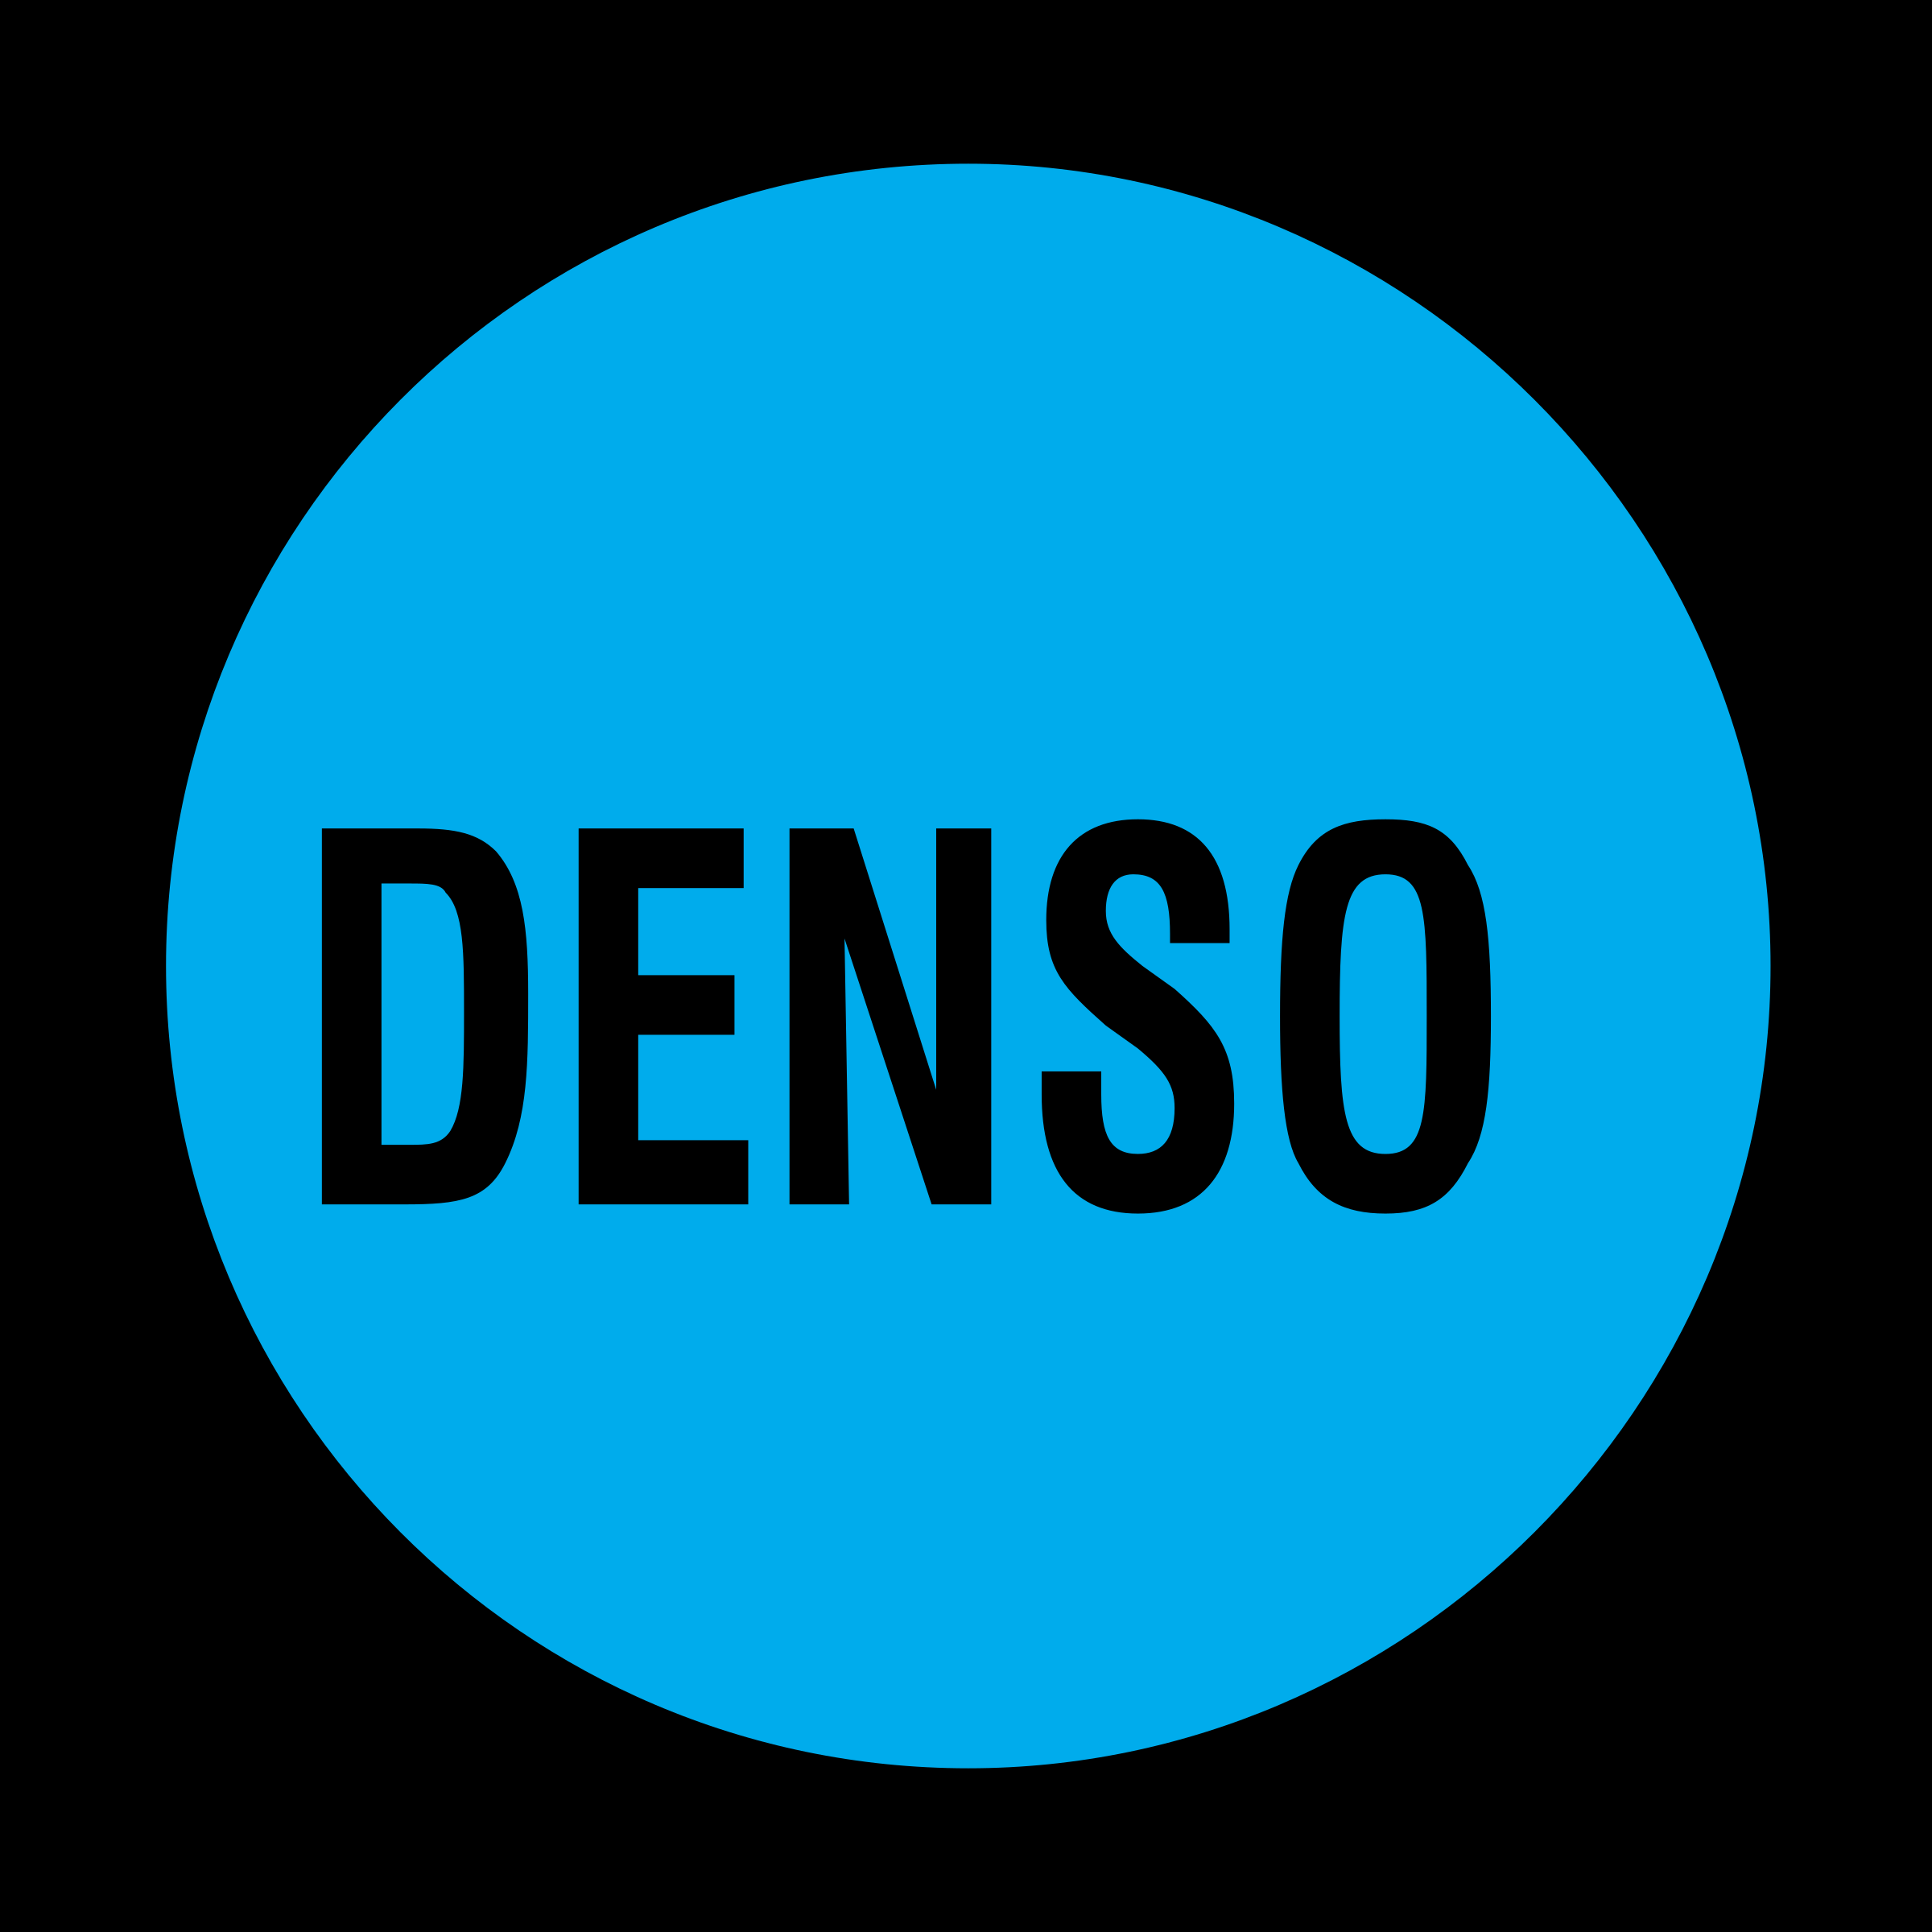 Denso Logo - Denso Logo PNG Transparent & SVG Vector - Freebie Supply